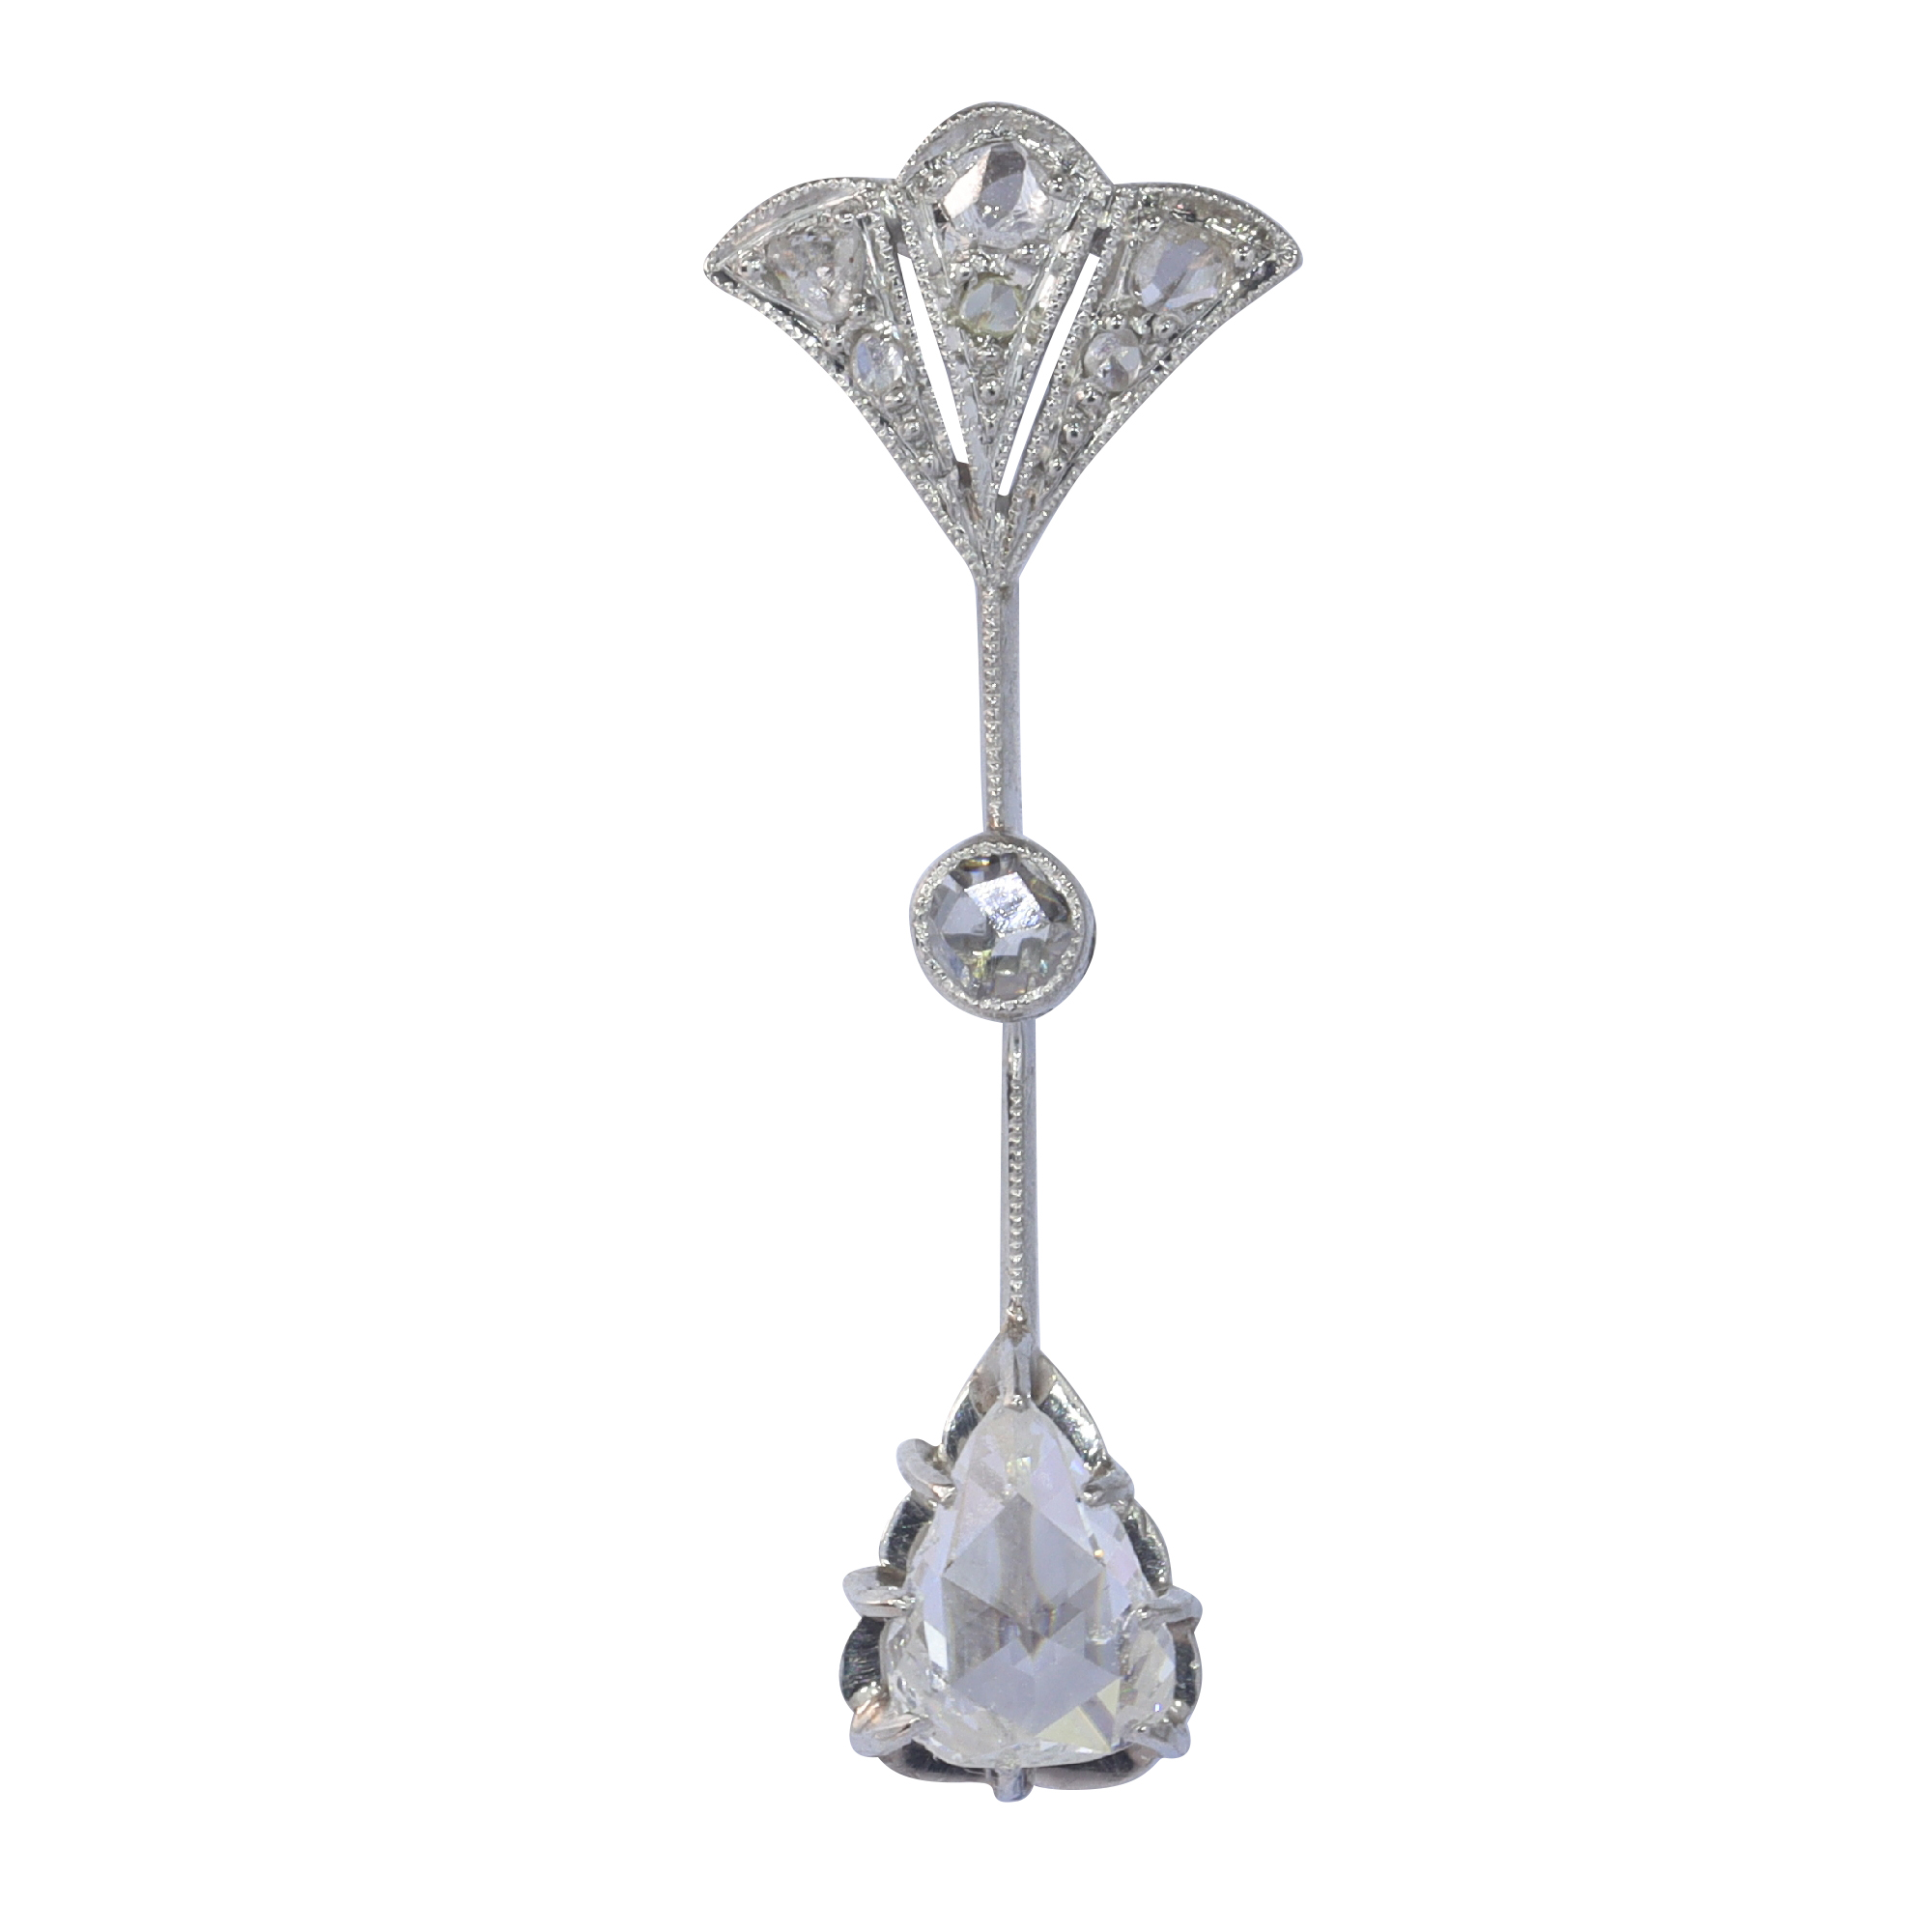 Vintage 1920's Art Deco diamond pendant with large rose cut diamond pear shape